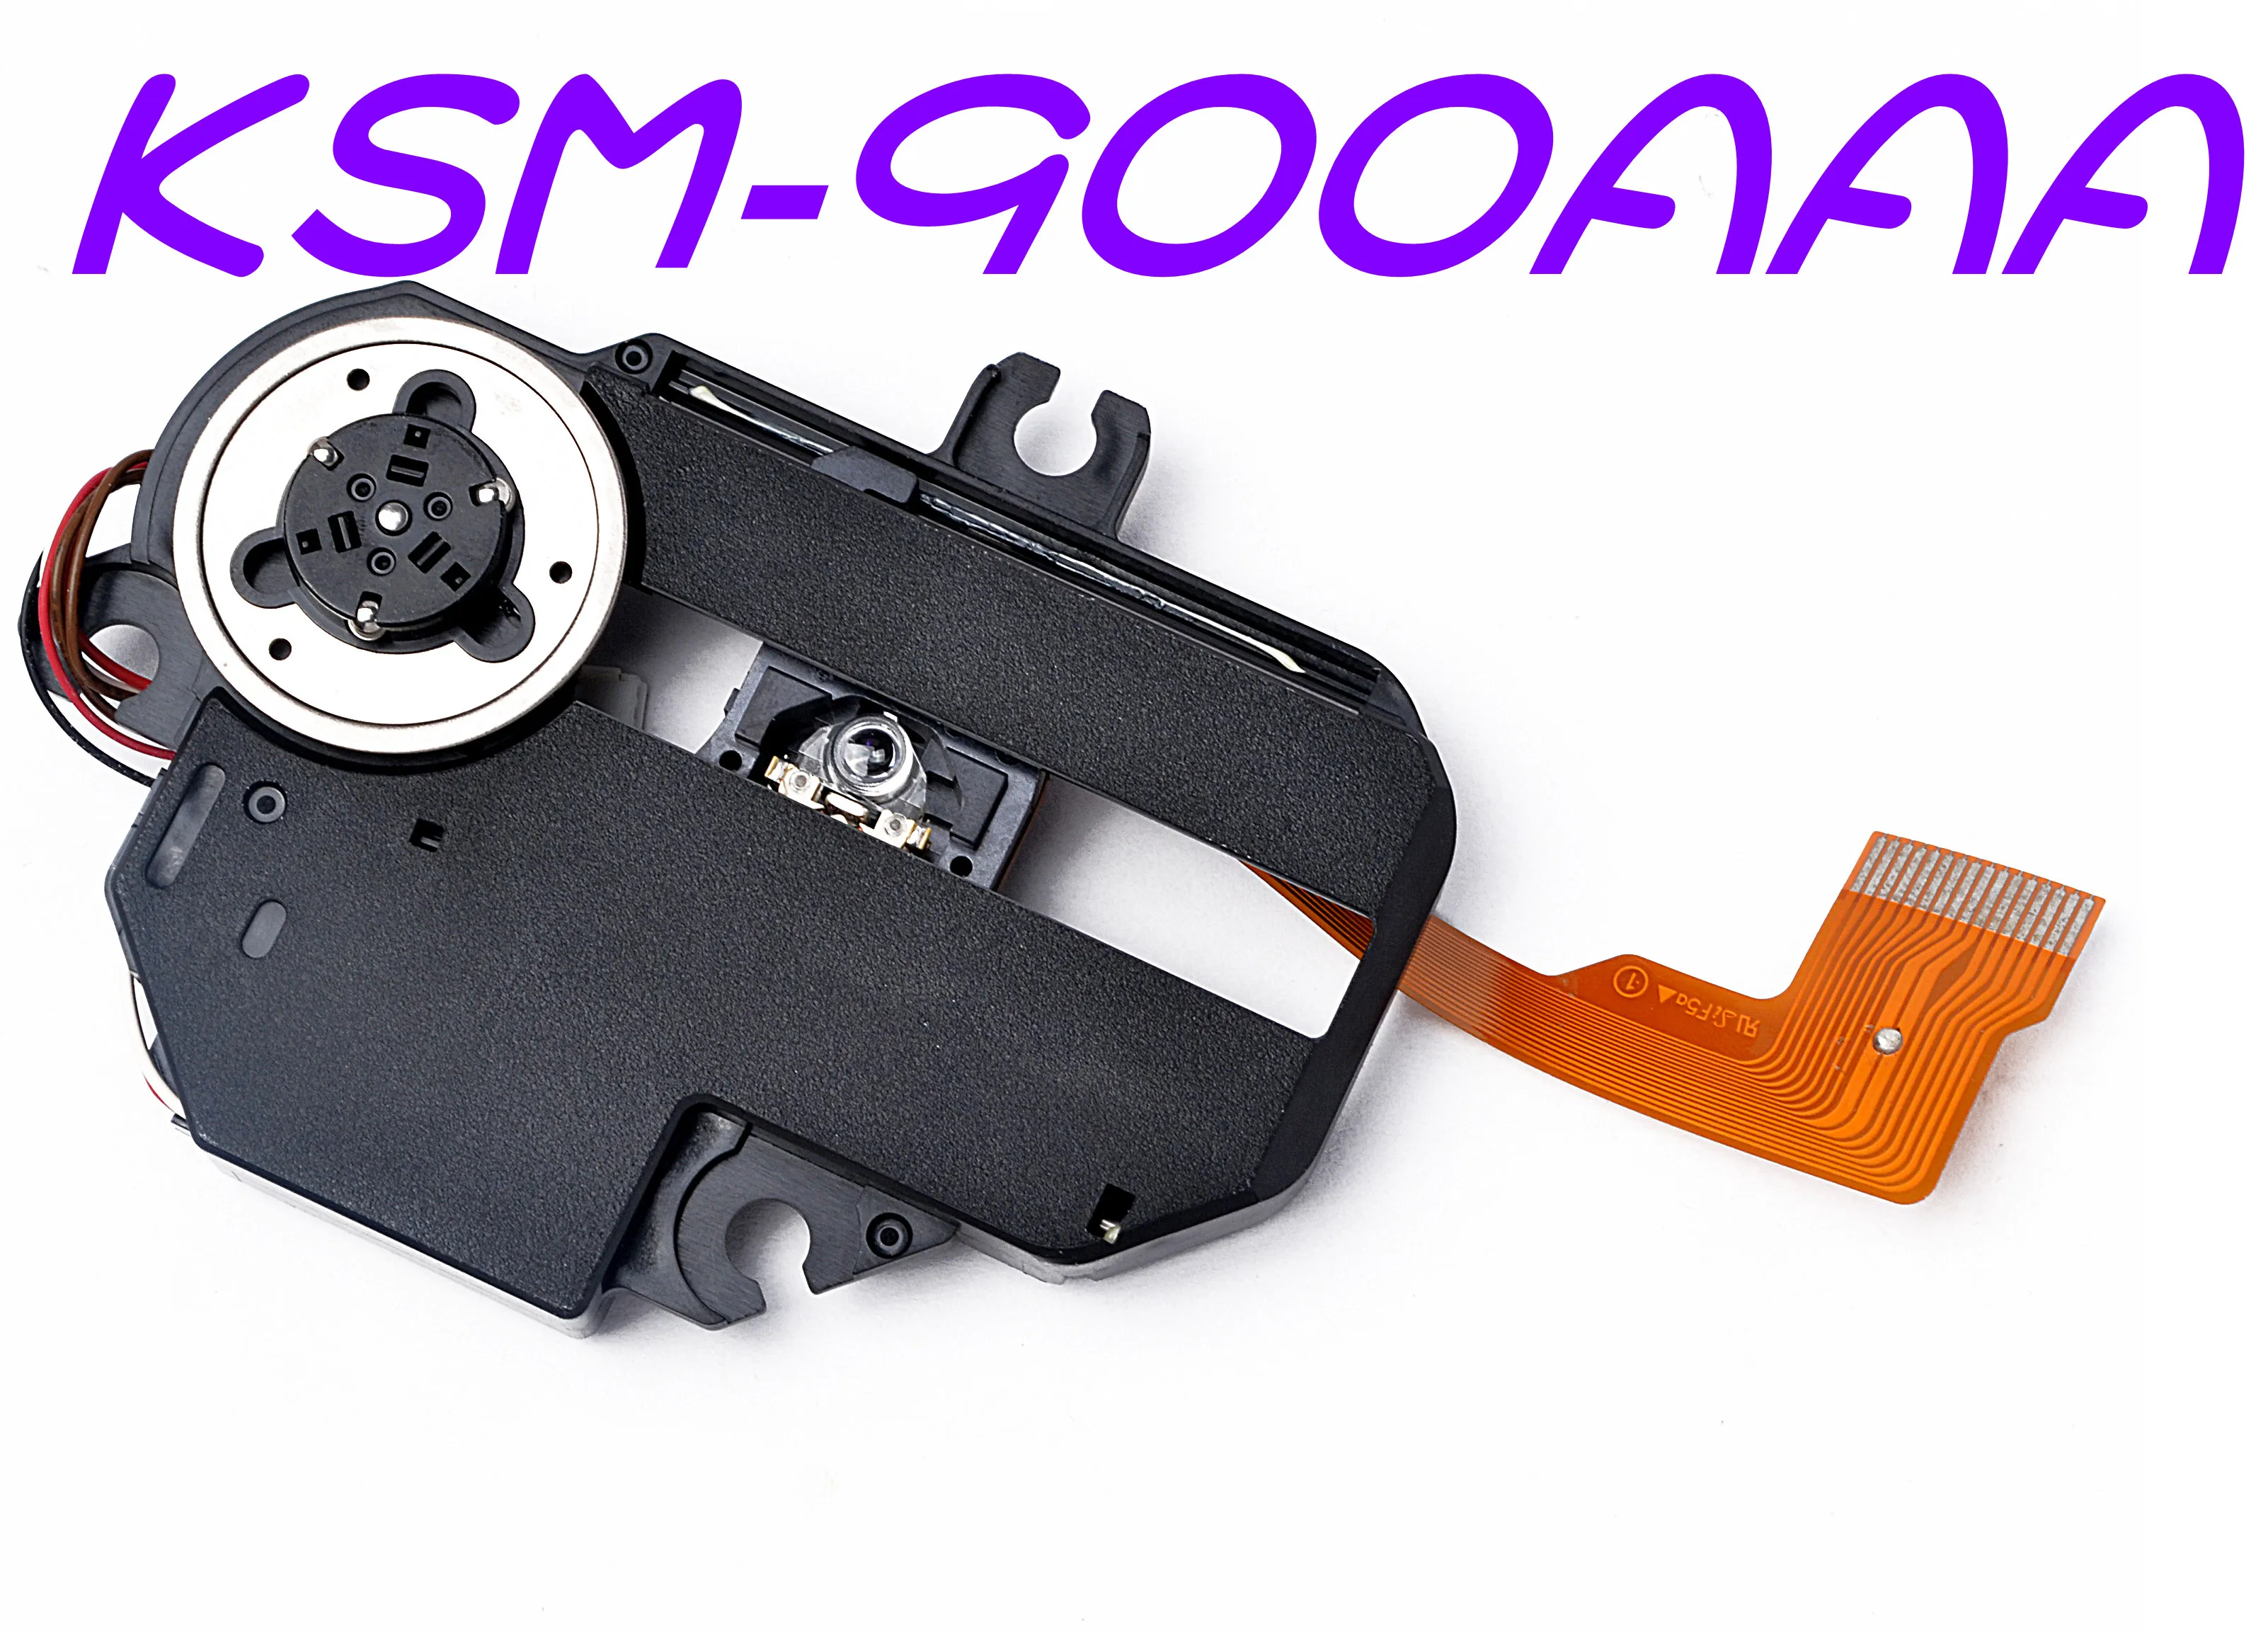 

KSM-900AAA Optical Laser Unit KSM900AAA 900AAA CD Walkman Optical Pick up Laser Lens Head